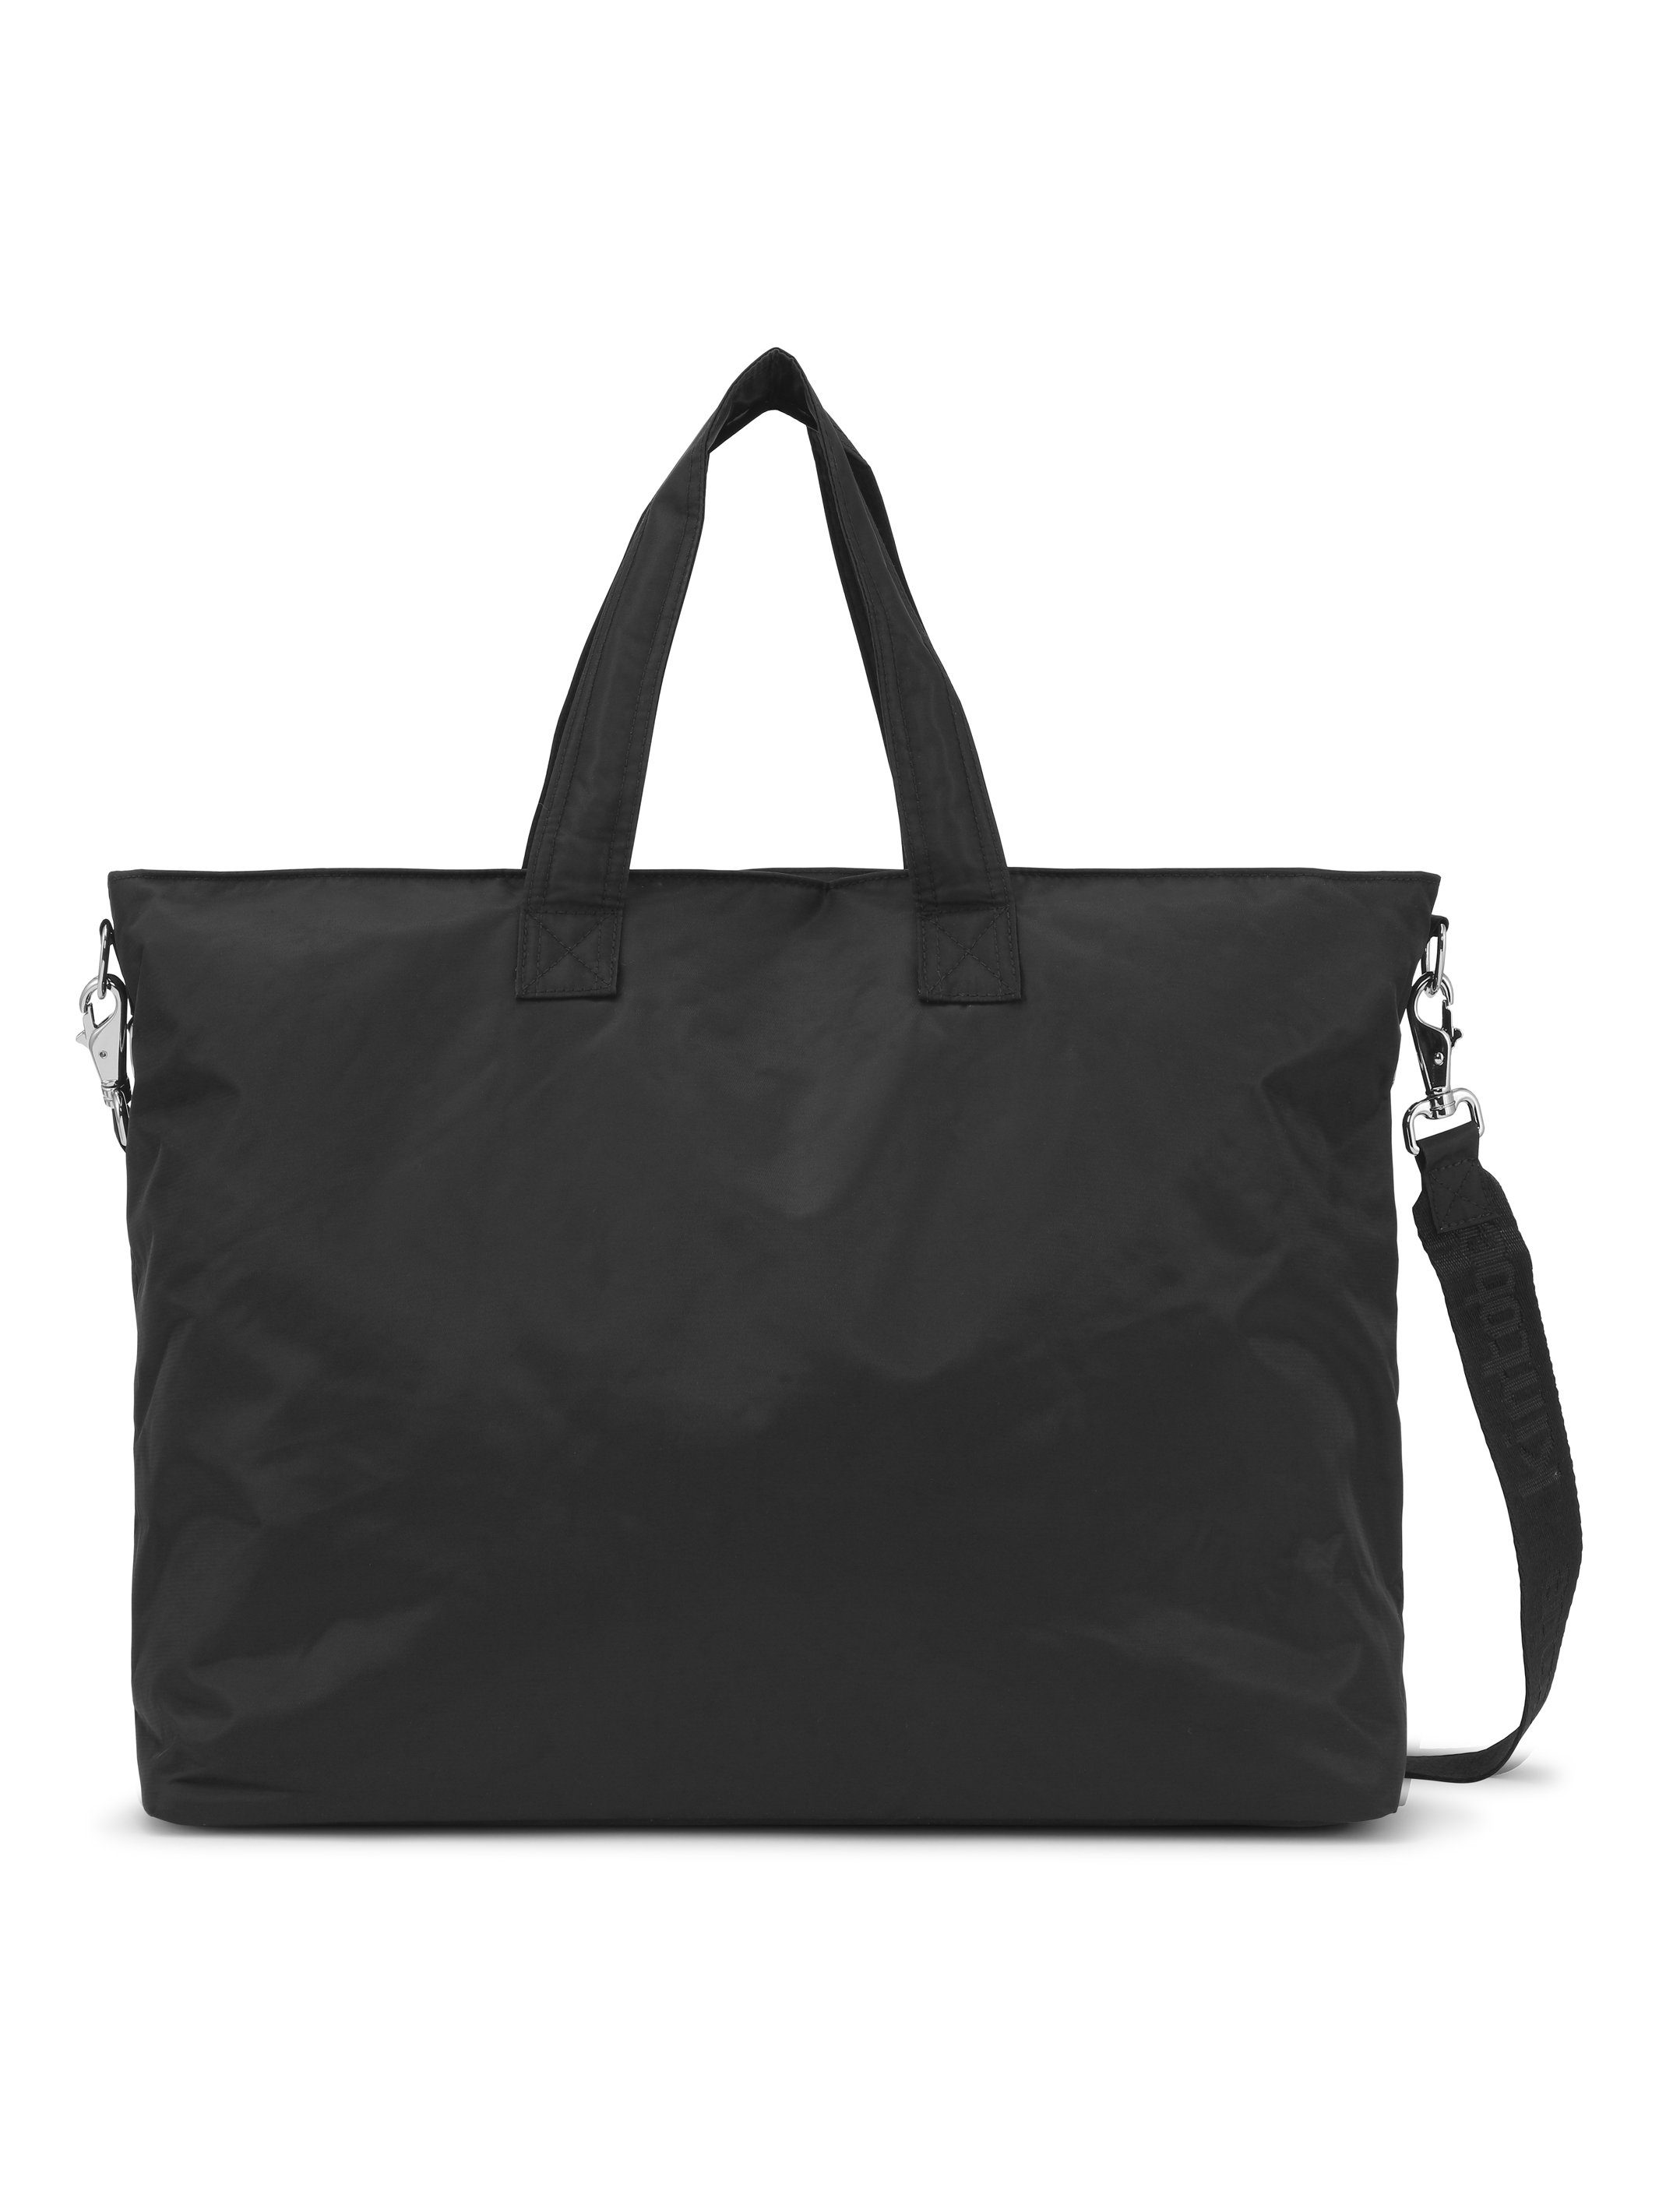 kintobe Passion Tragetasche Bag Tote Black Oversized